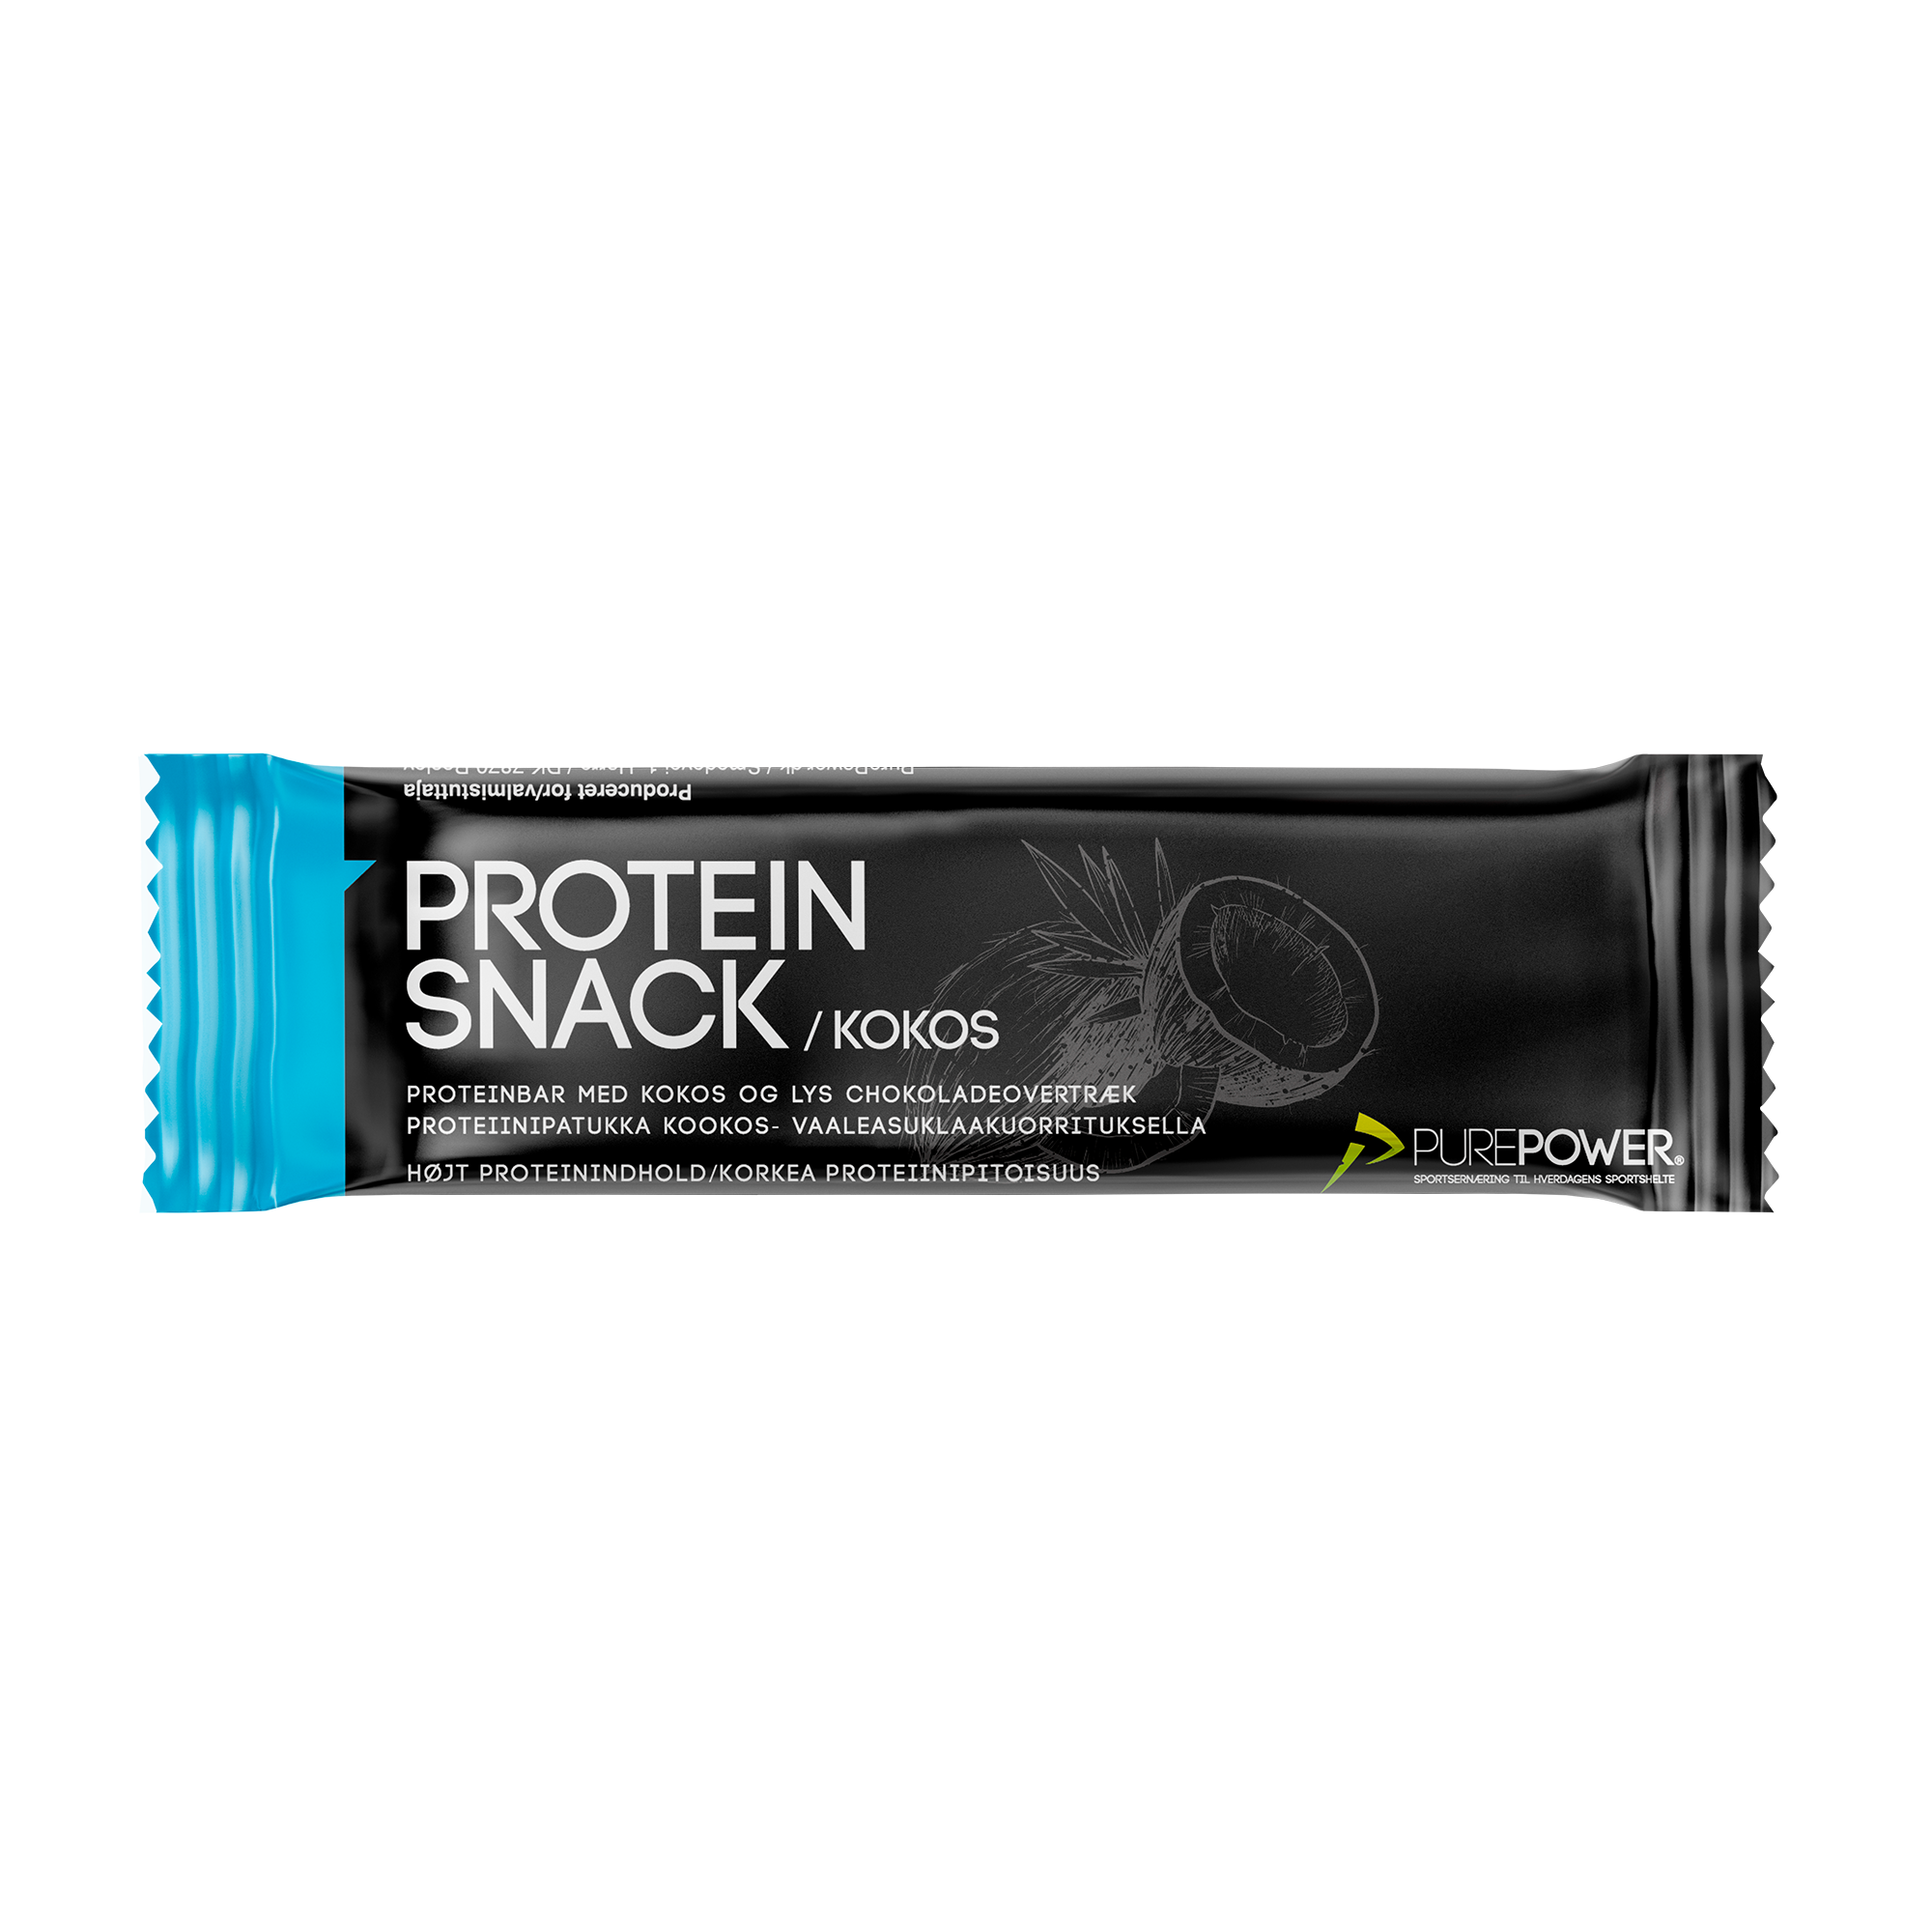 Se PurePower Protein Snack - Kokos - 40 gram. hos PurePower